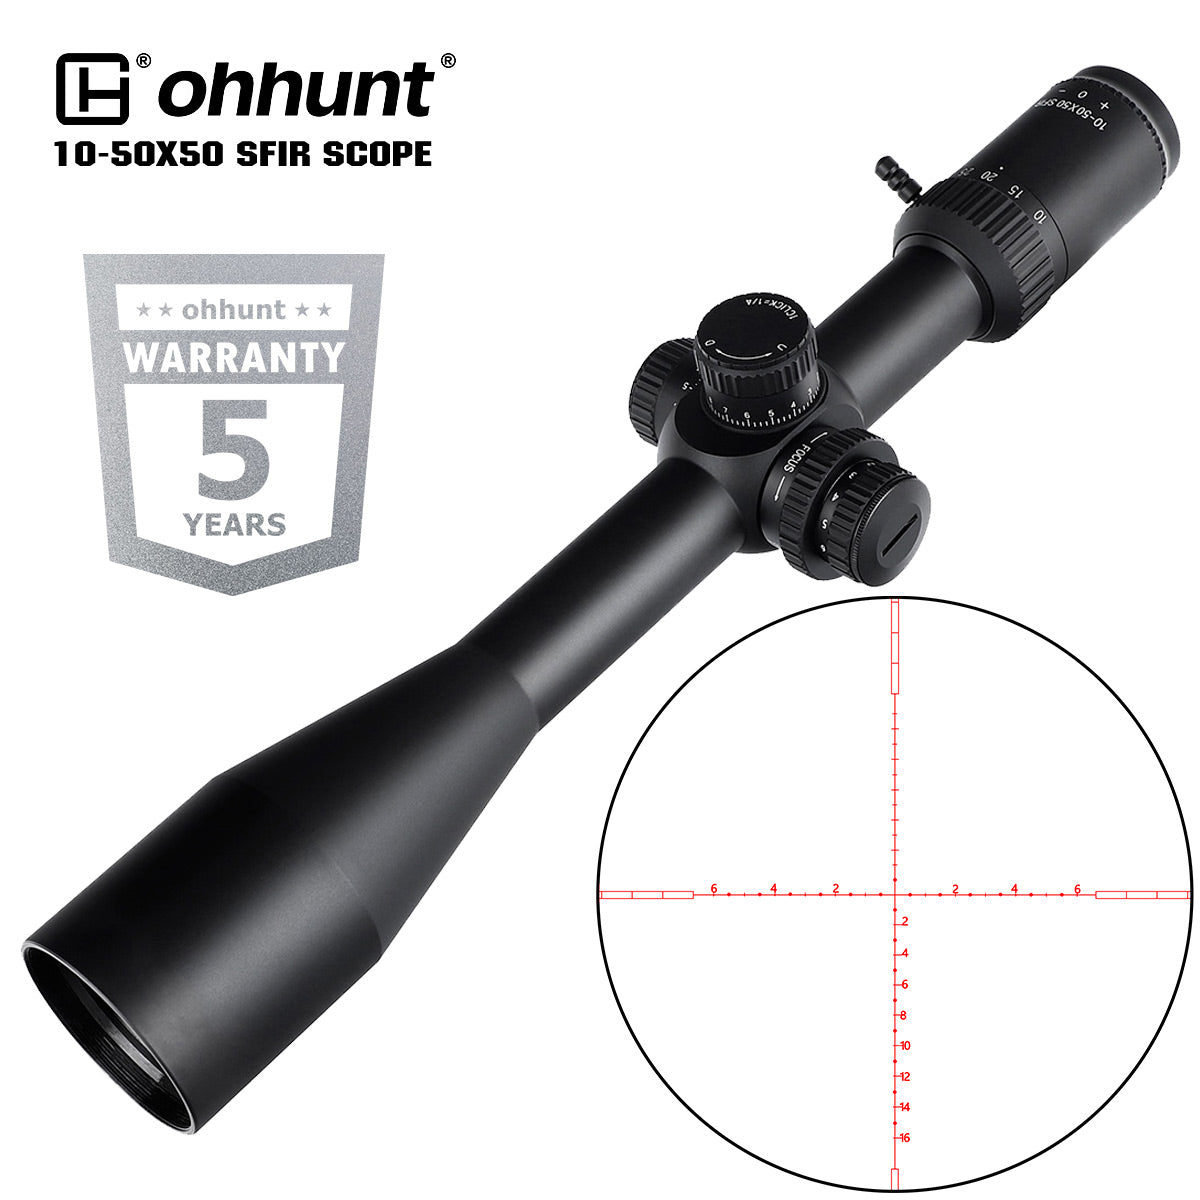 10-50X50 SFIR scope